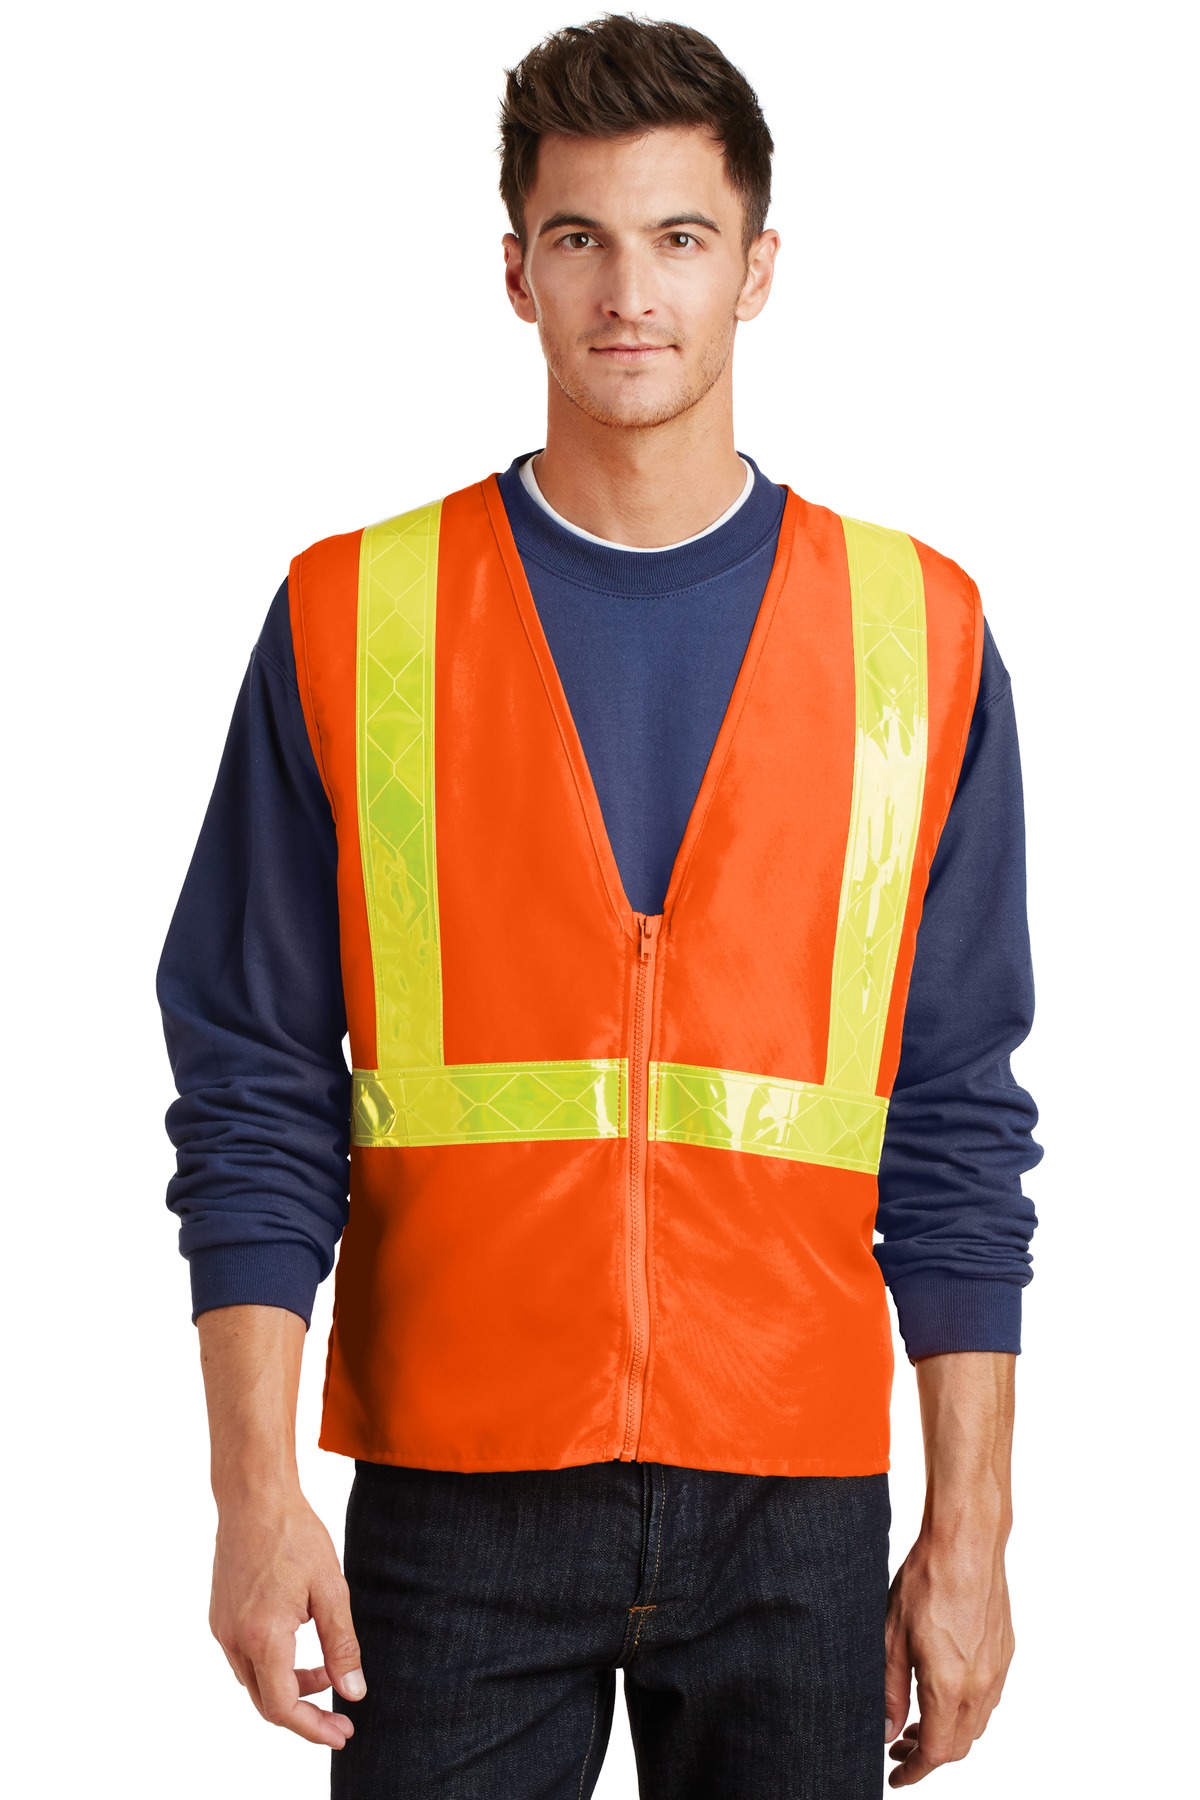 Port Authority Enhanced Visibility Vest.  SV01